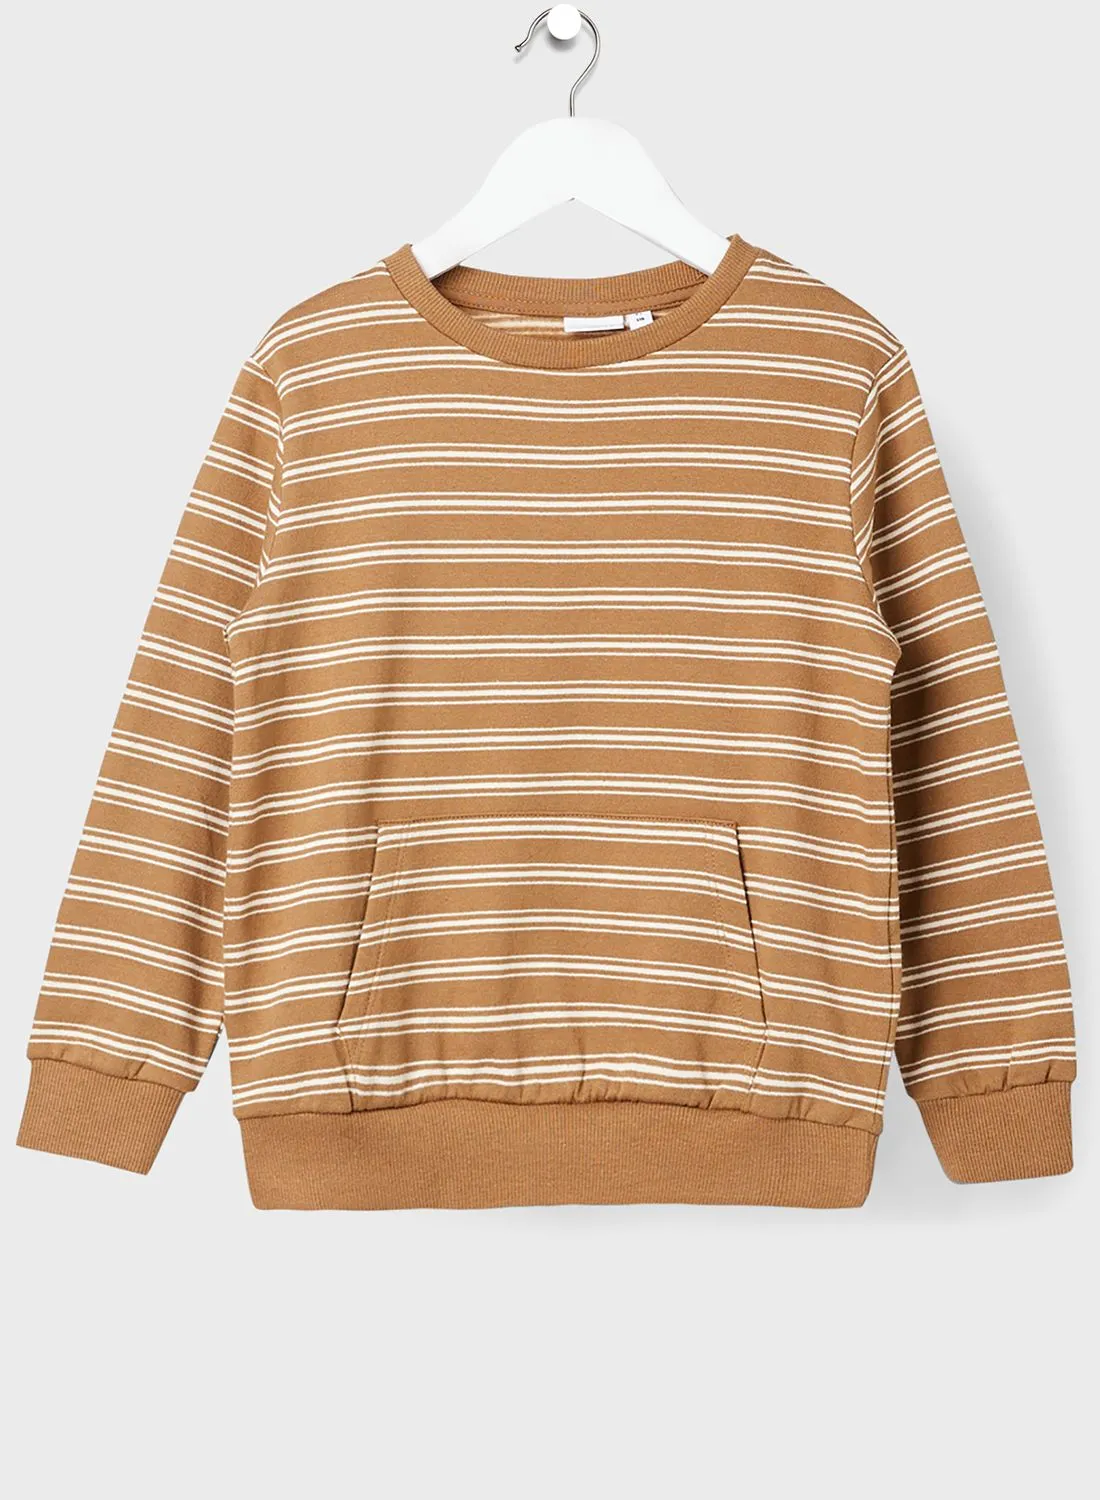 NAME IT Kids Stripe Long Sleeve Sweatshirt